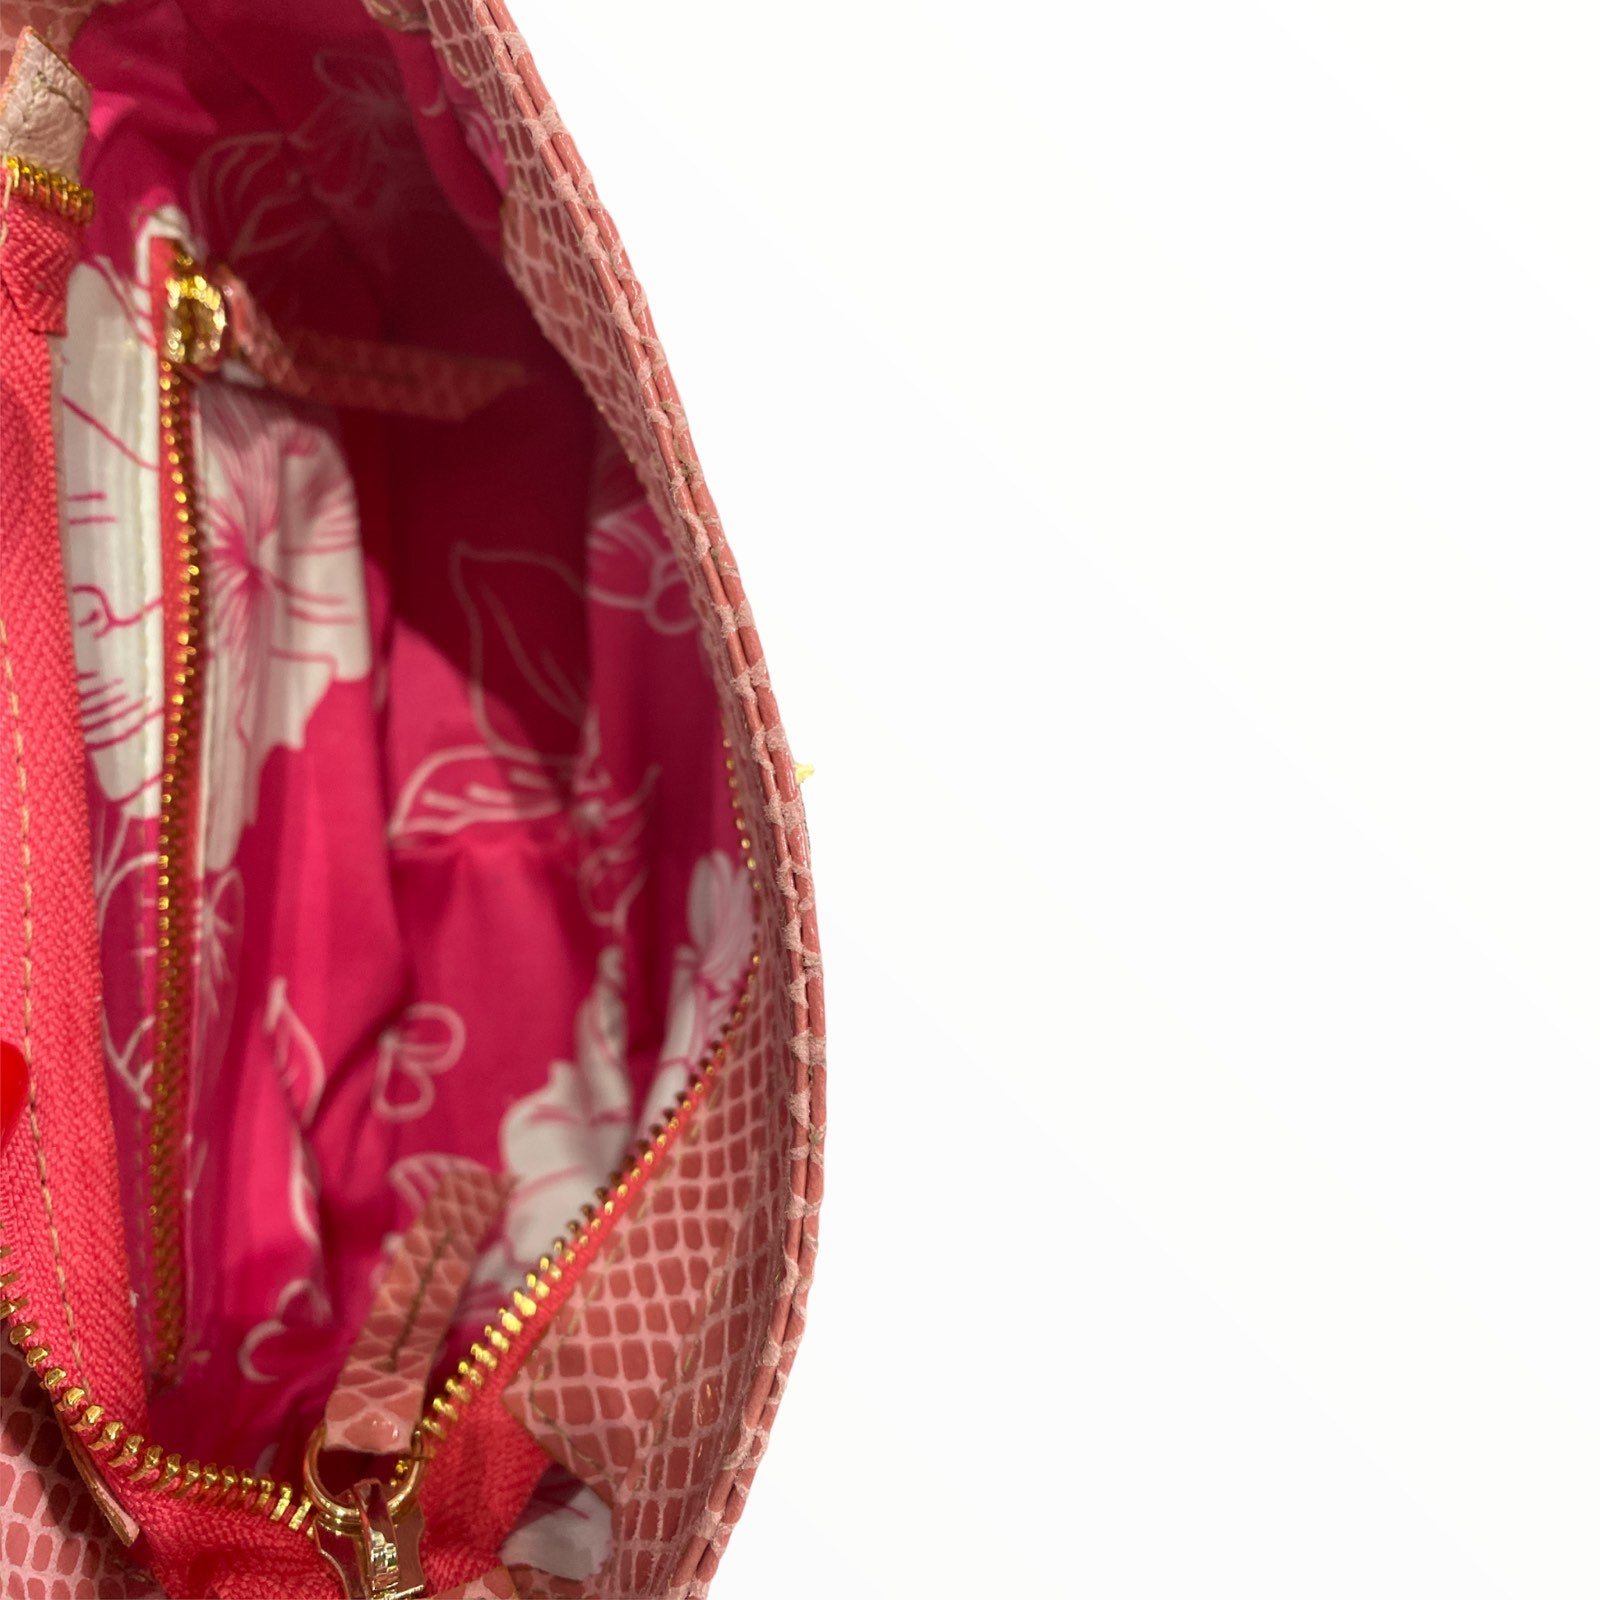 Mandy mini. Pink mermaid leather limited edition bag